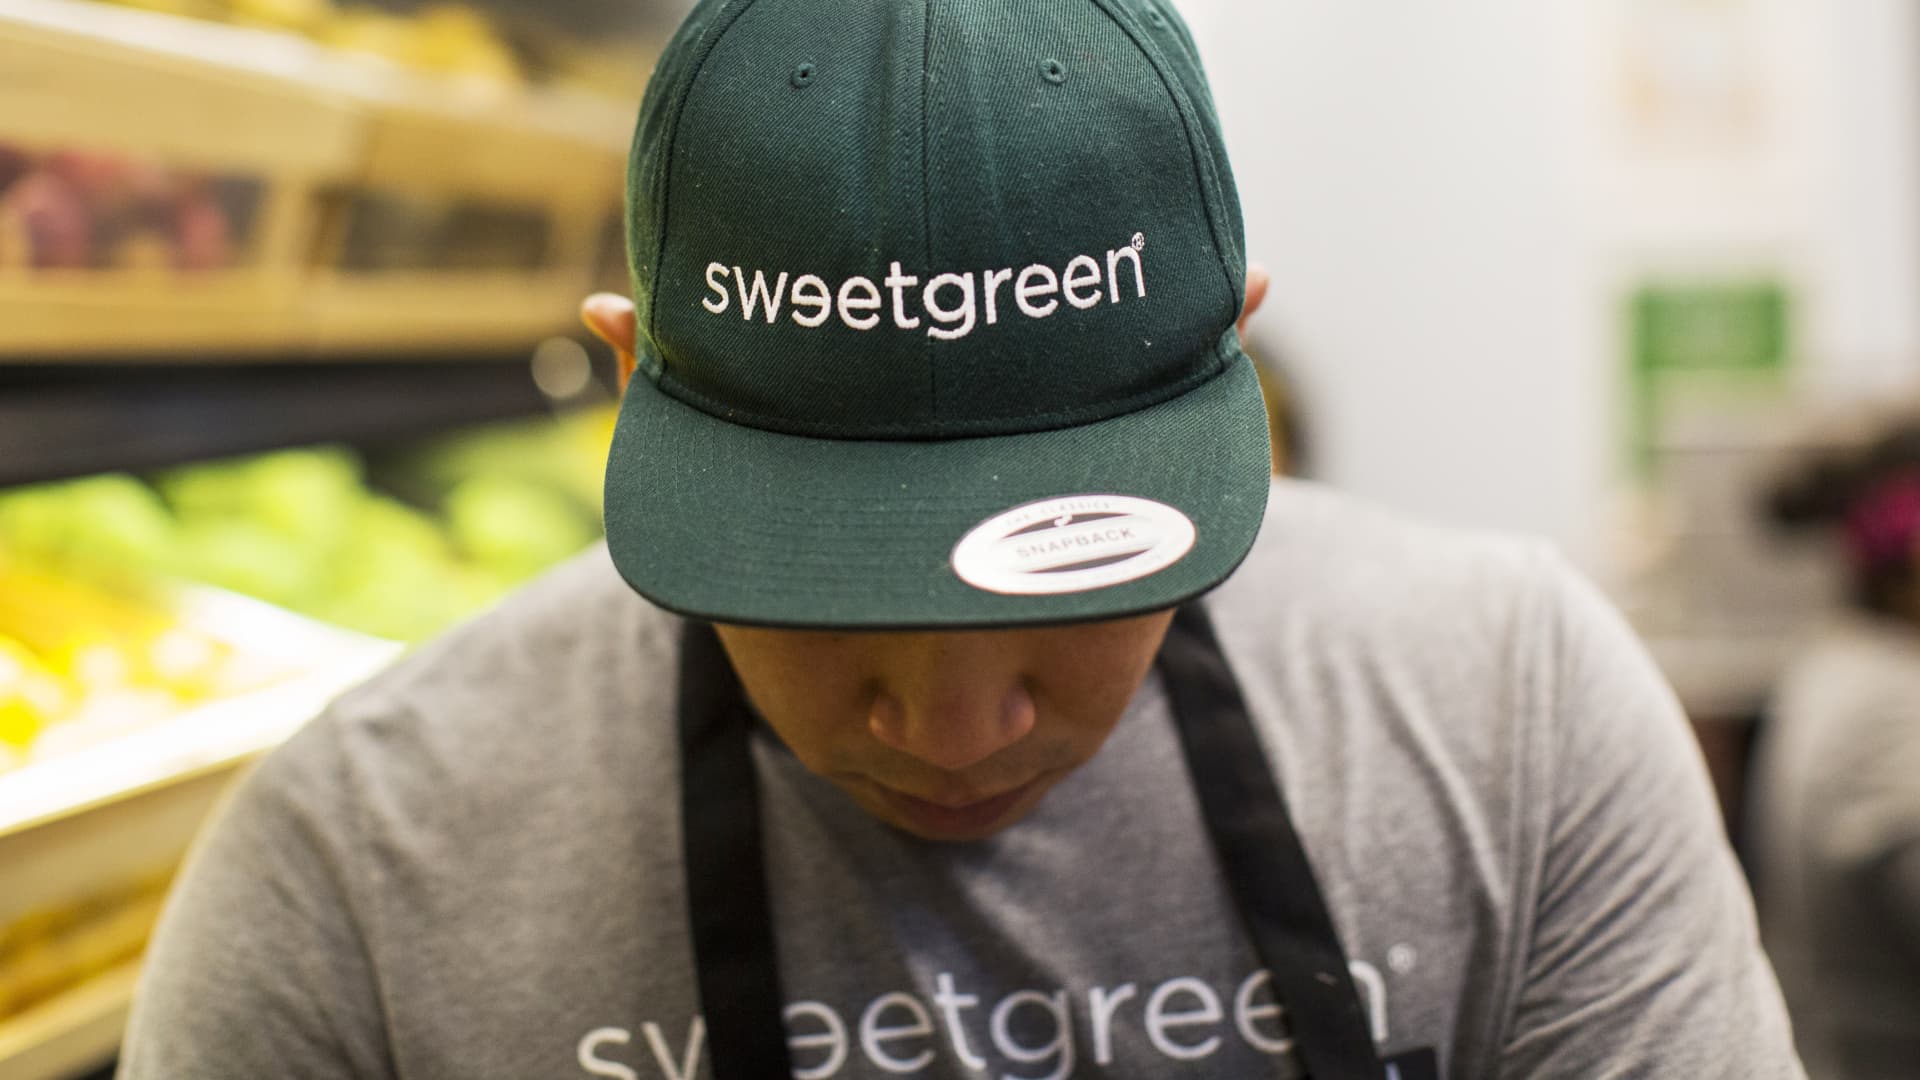 Sweetgreen (SG) Q2 2022 earnings meet estimates